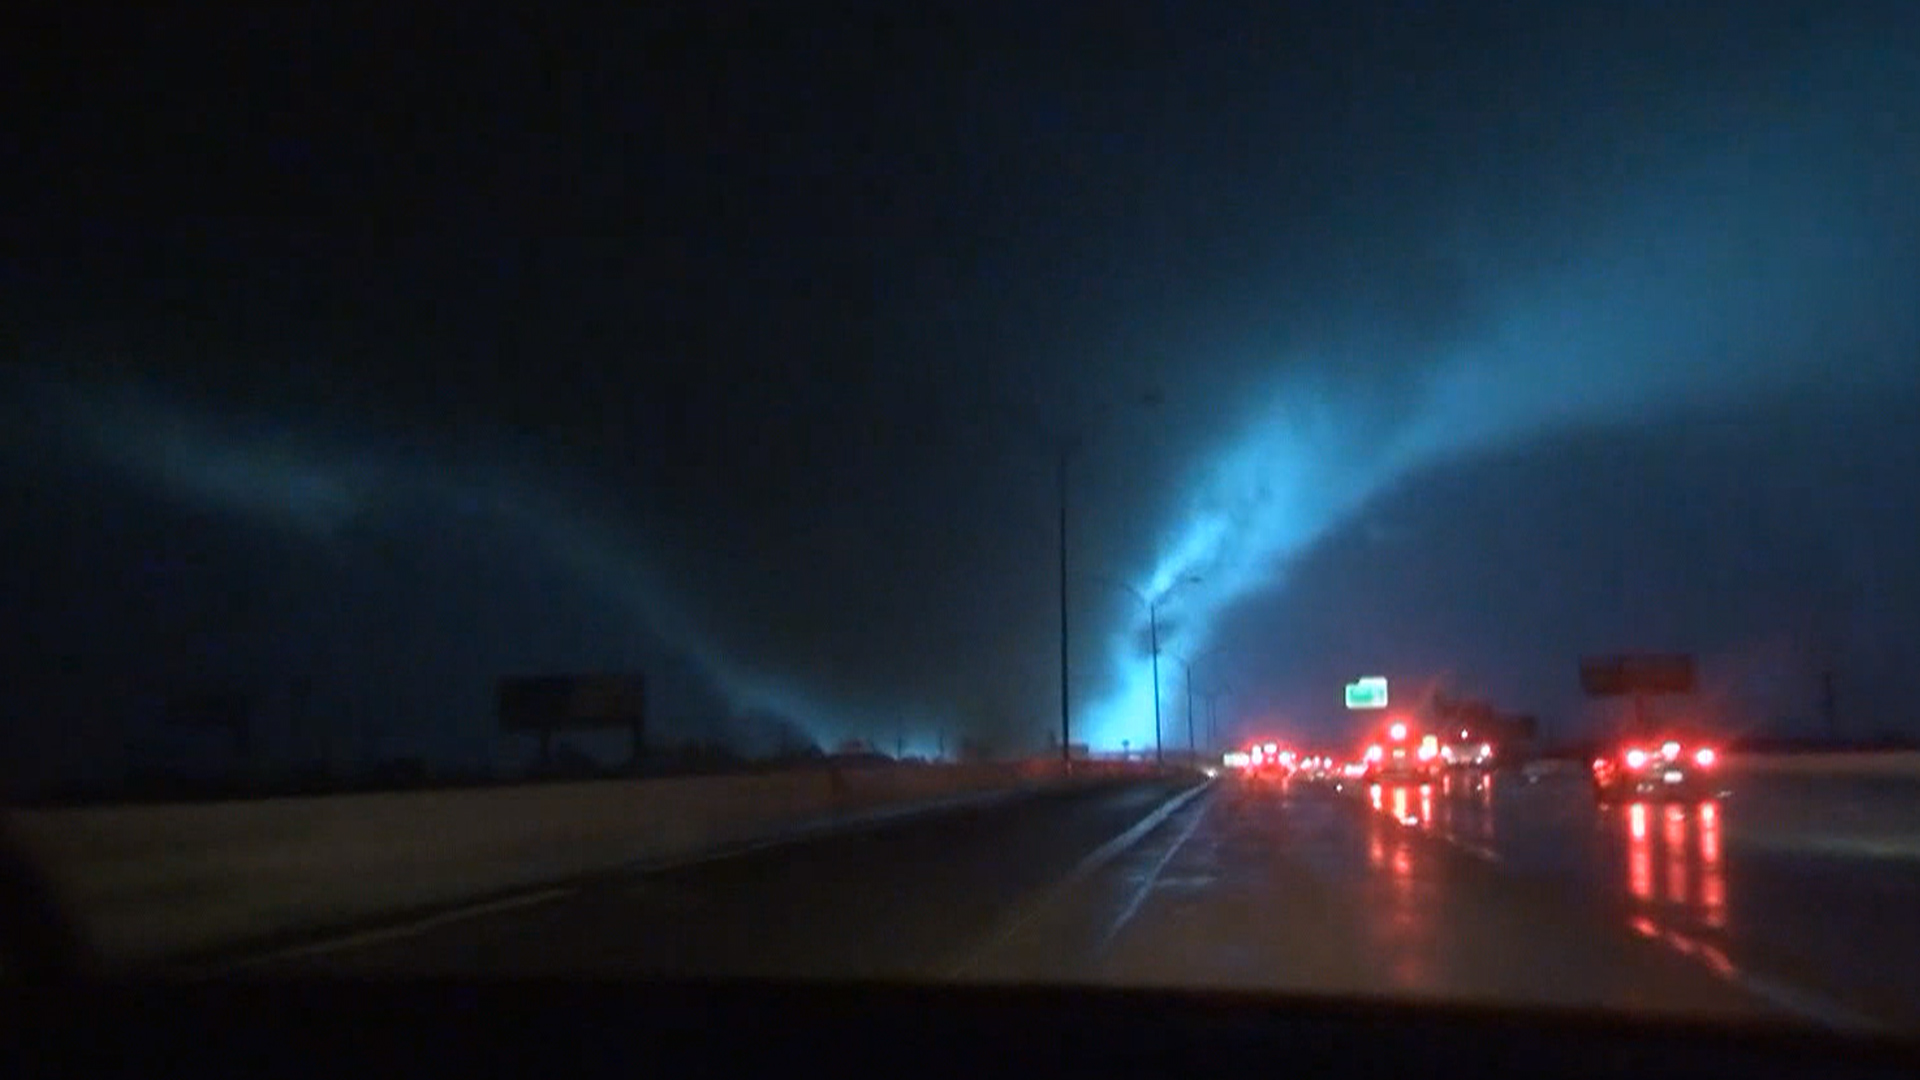 At least 8 dead as severe weather, tornadoes hit Dallas area - TODAY.com1920 x 1080